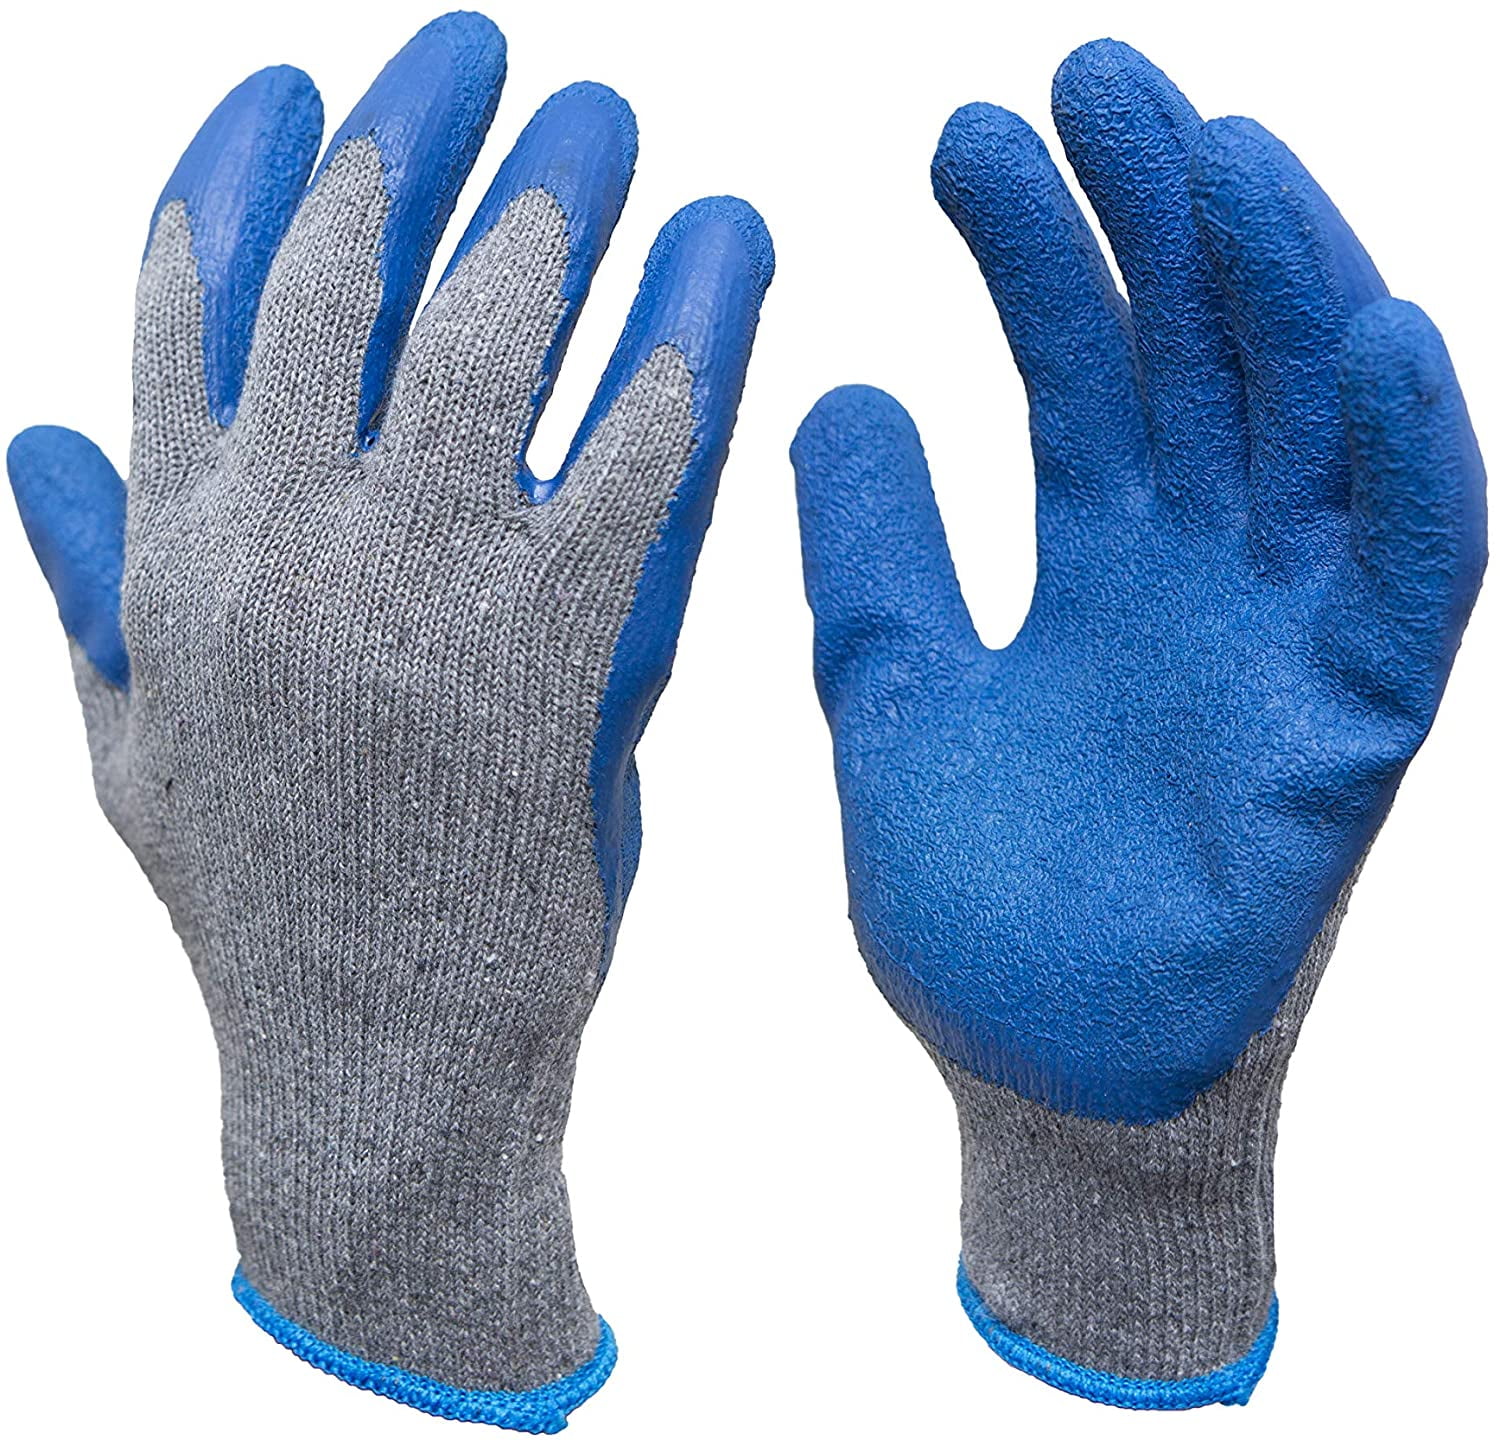 L or XL Orange Latex Grip Builders Safety Work Gloves X 5 PAIRS 